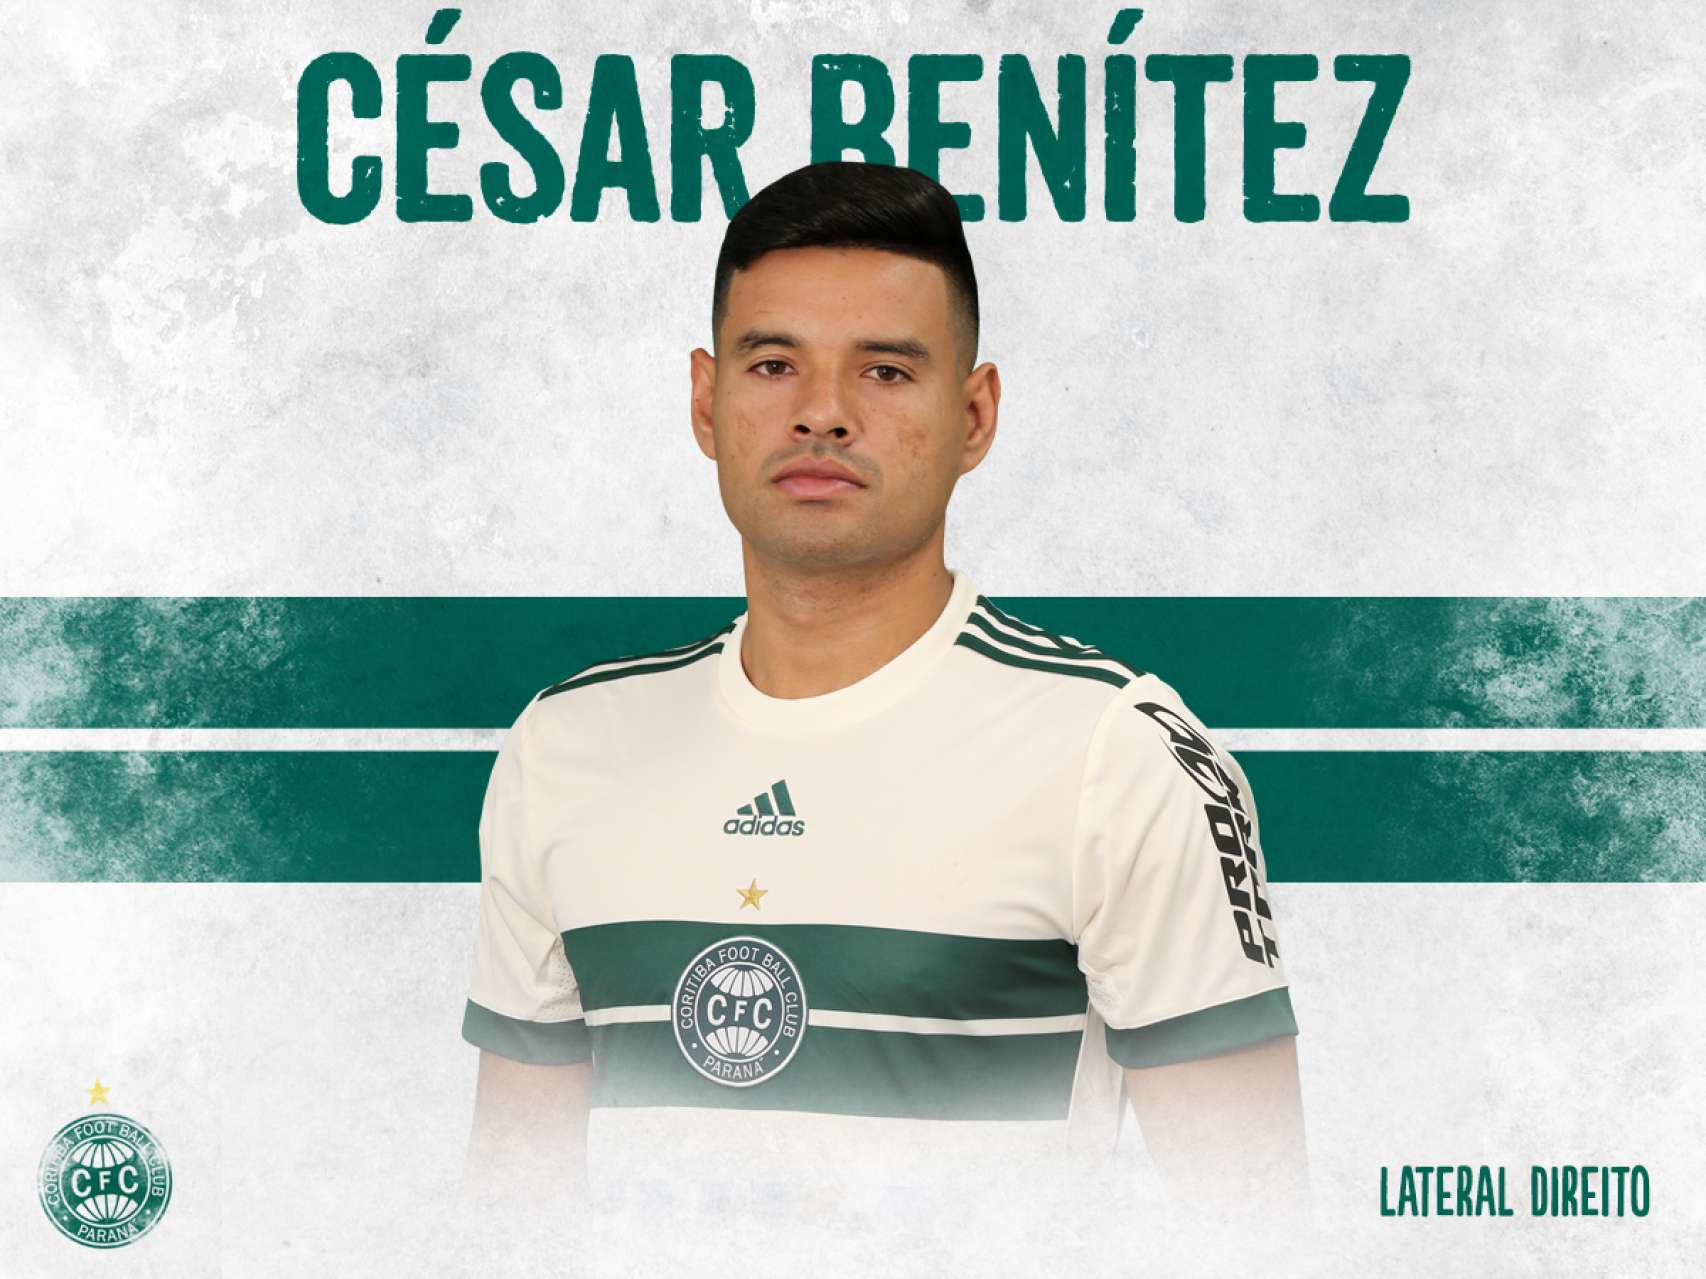 Elenco 2018 - Csar Bentez